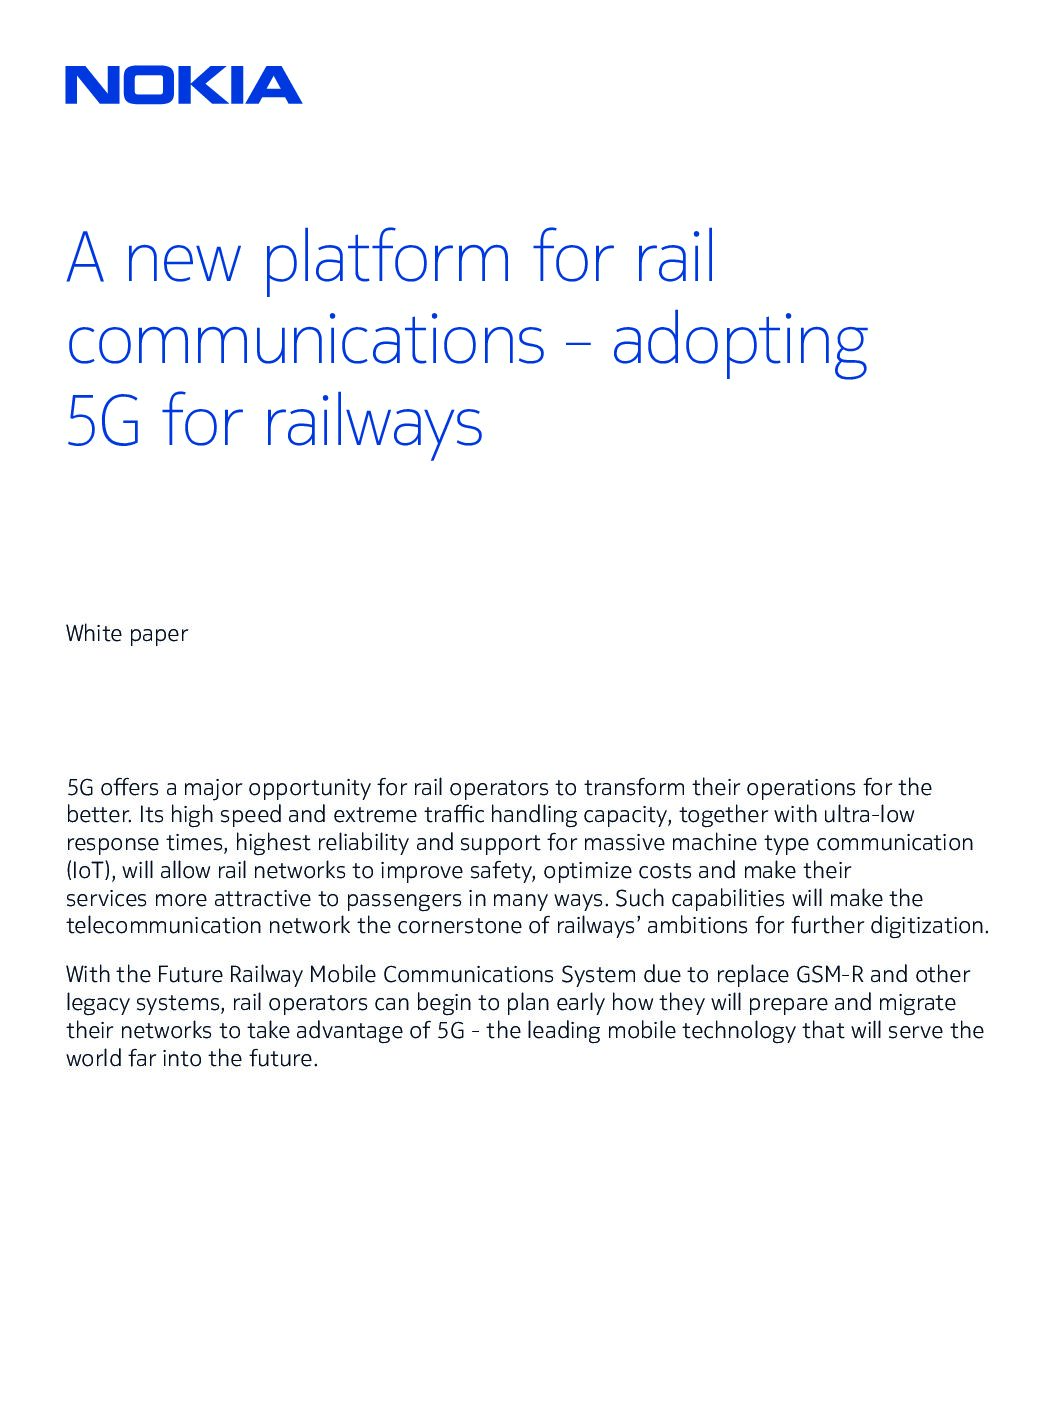 A New Platform for Rail Communications – Adopting 5G for Railways